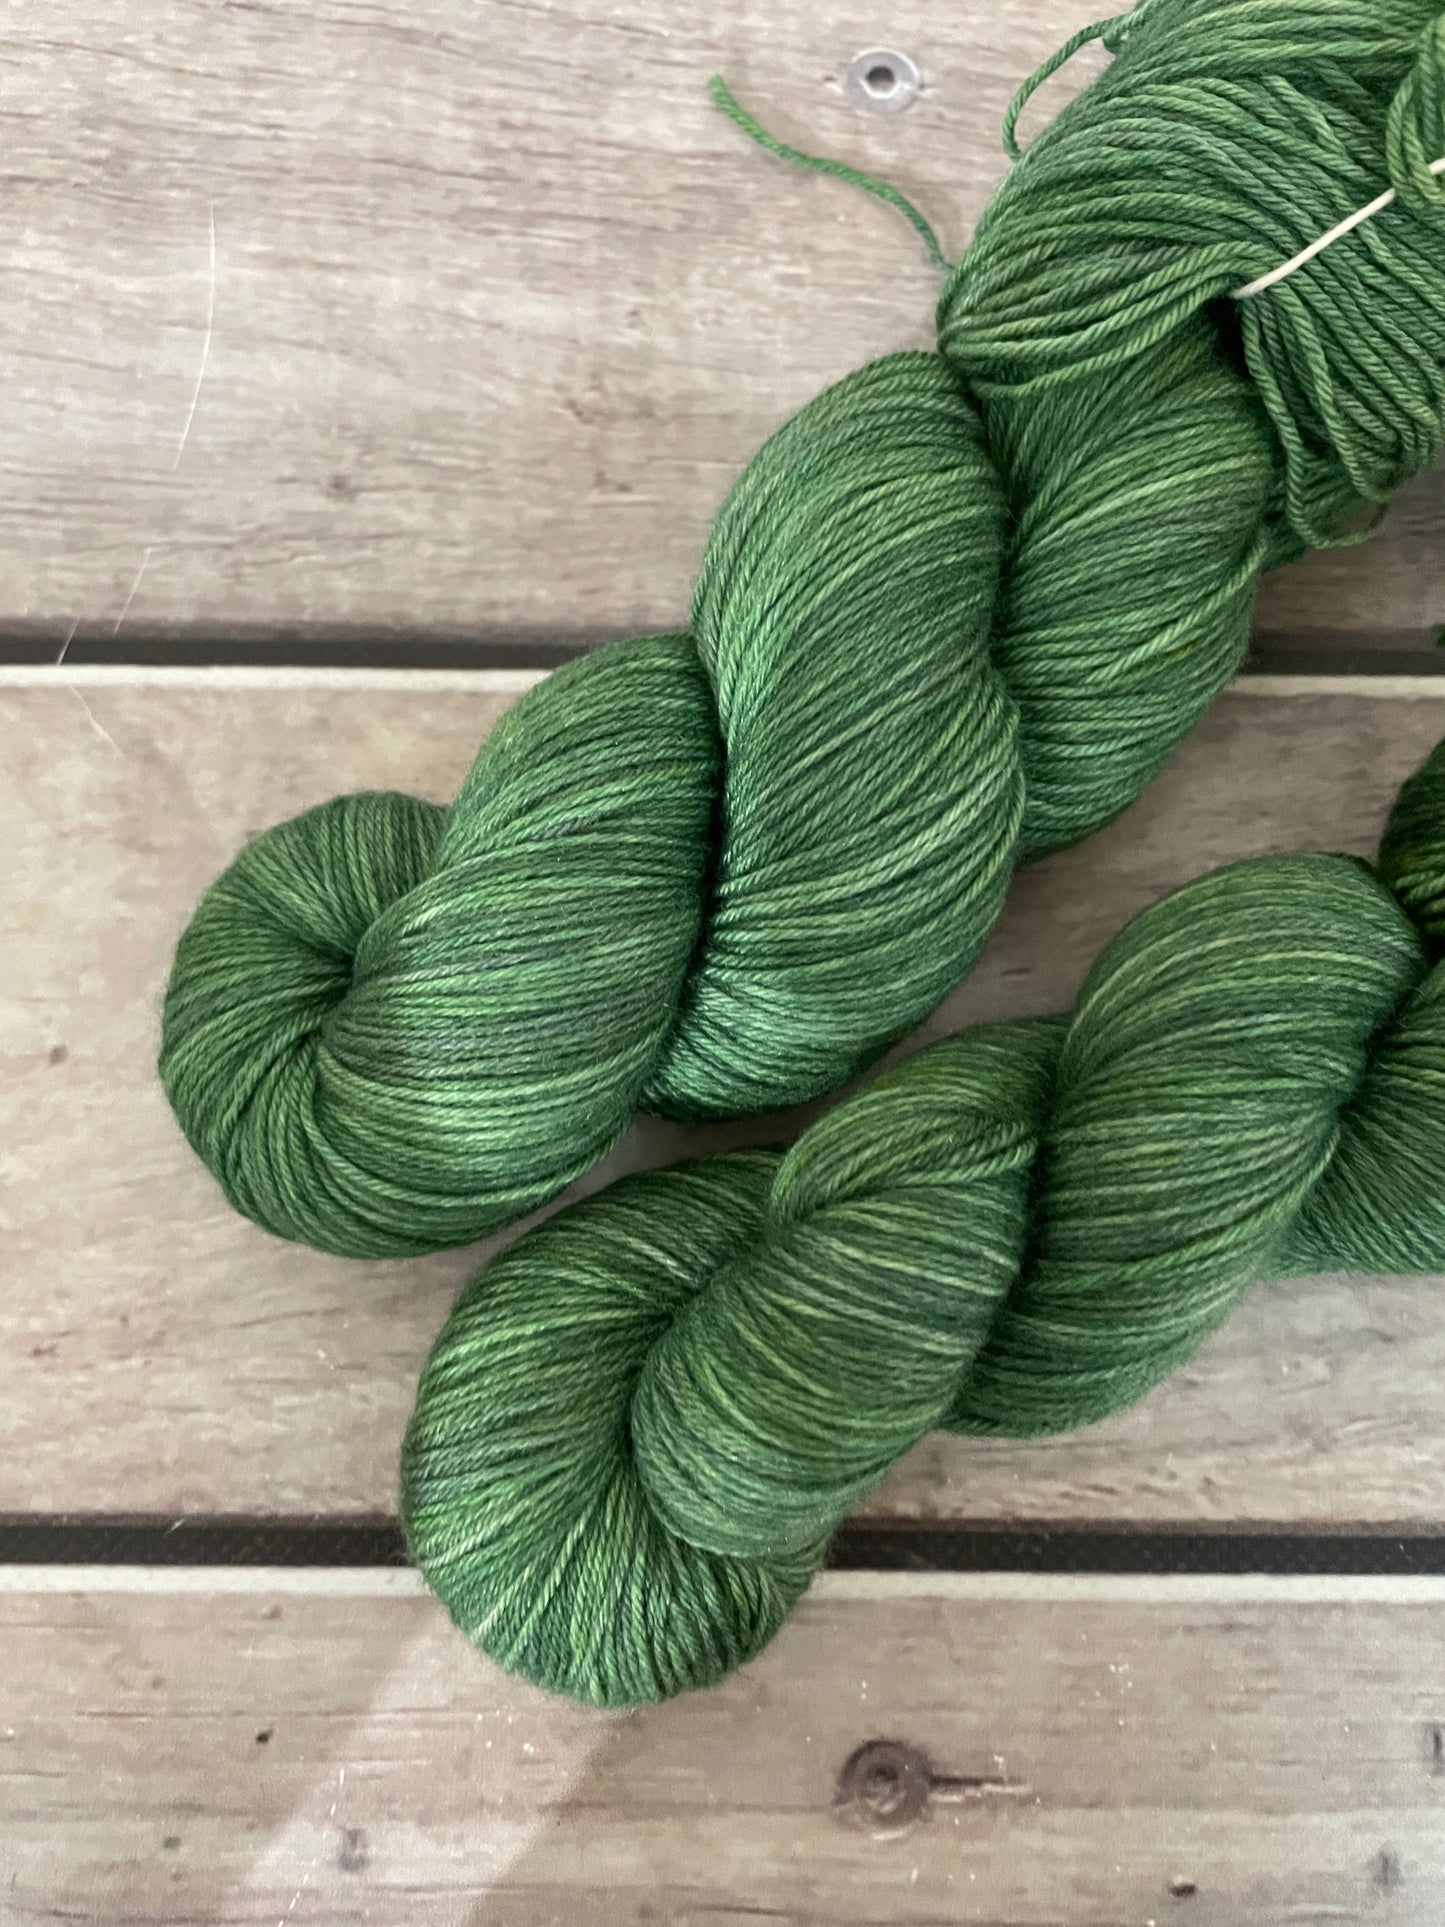 The Pines - sock yarn in merino and nylon yarn - Darjeeling